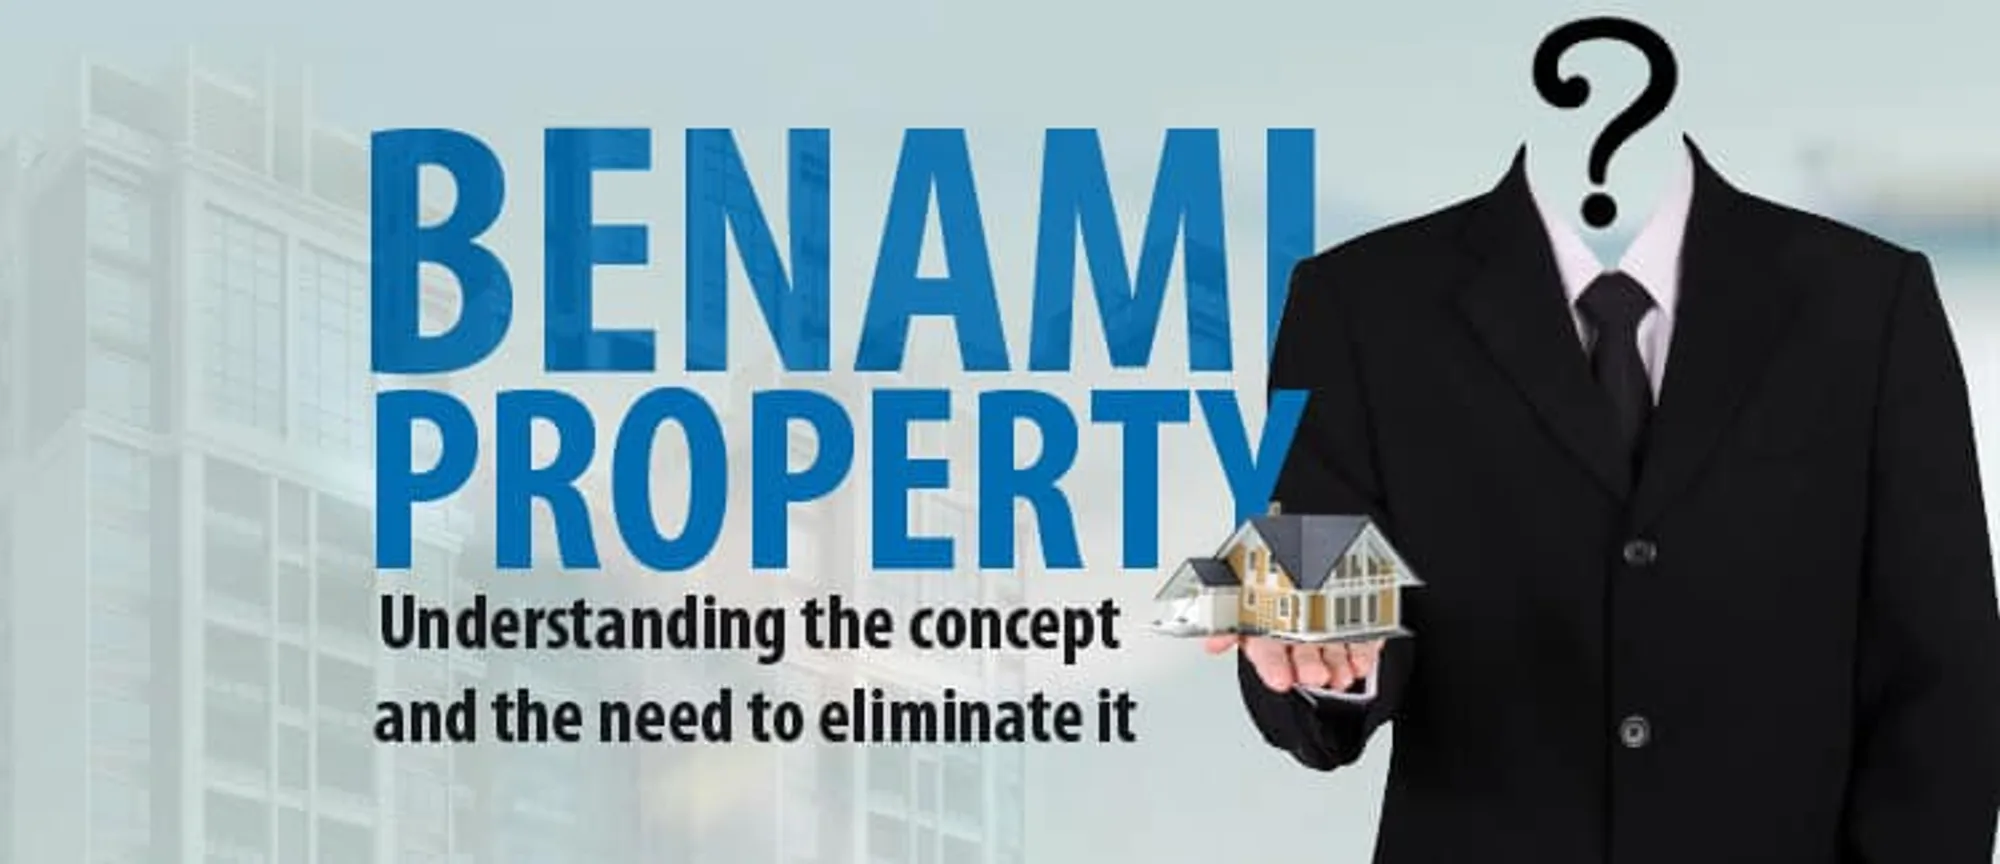 Benami Property in India